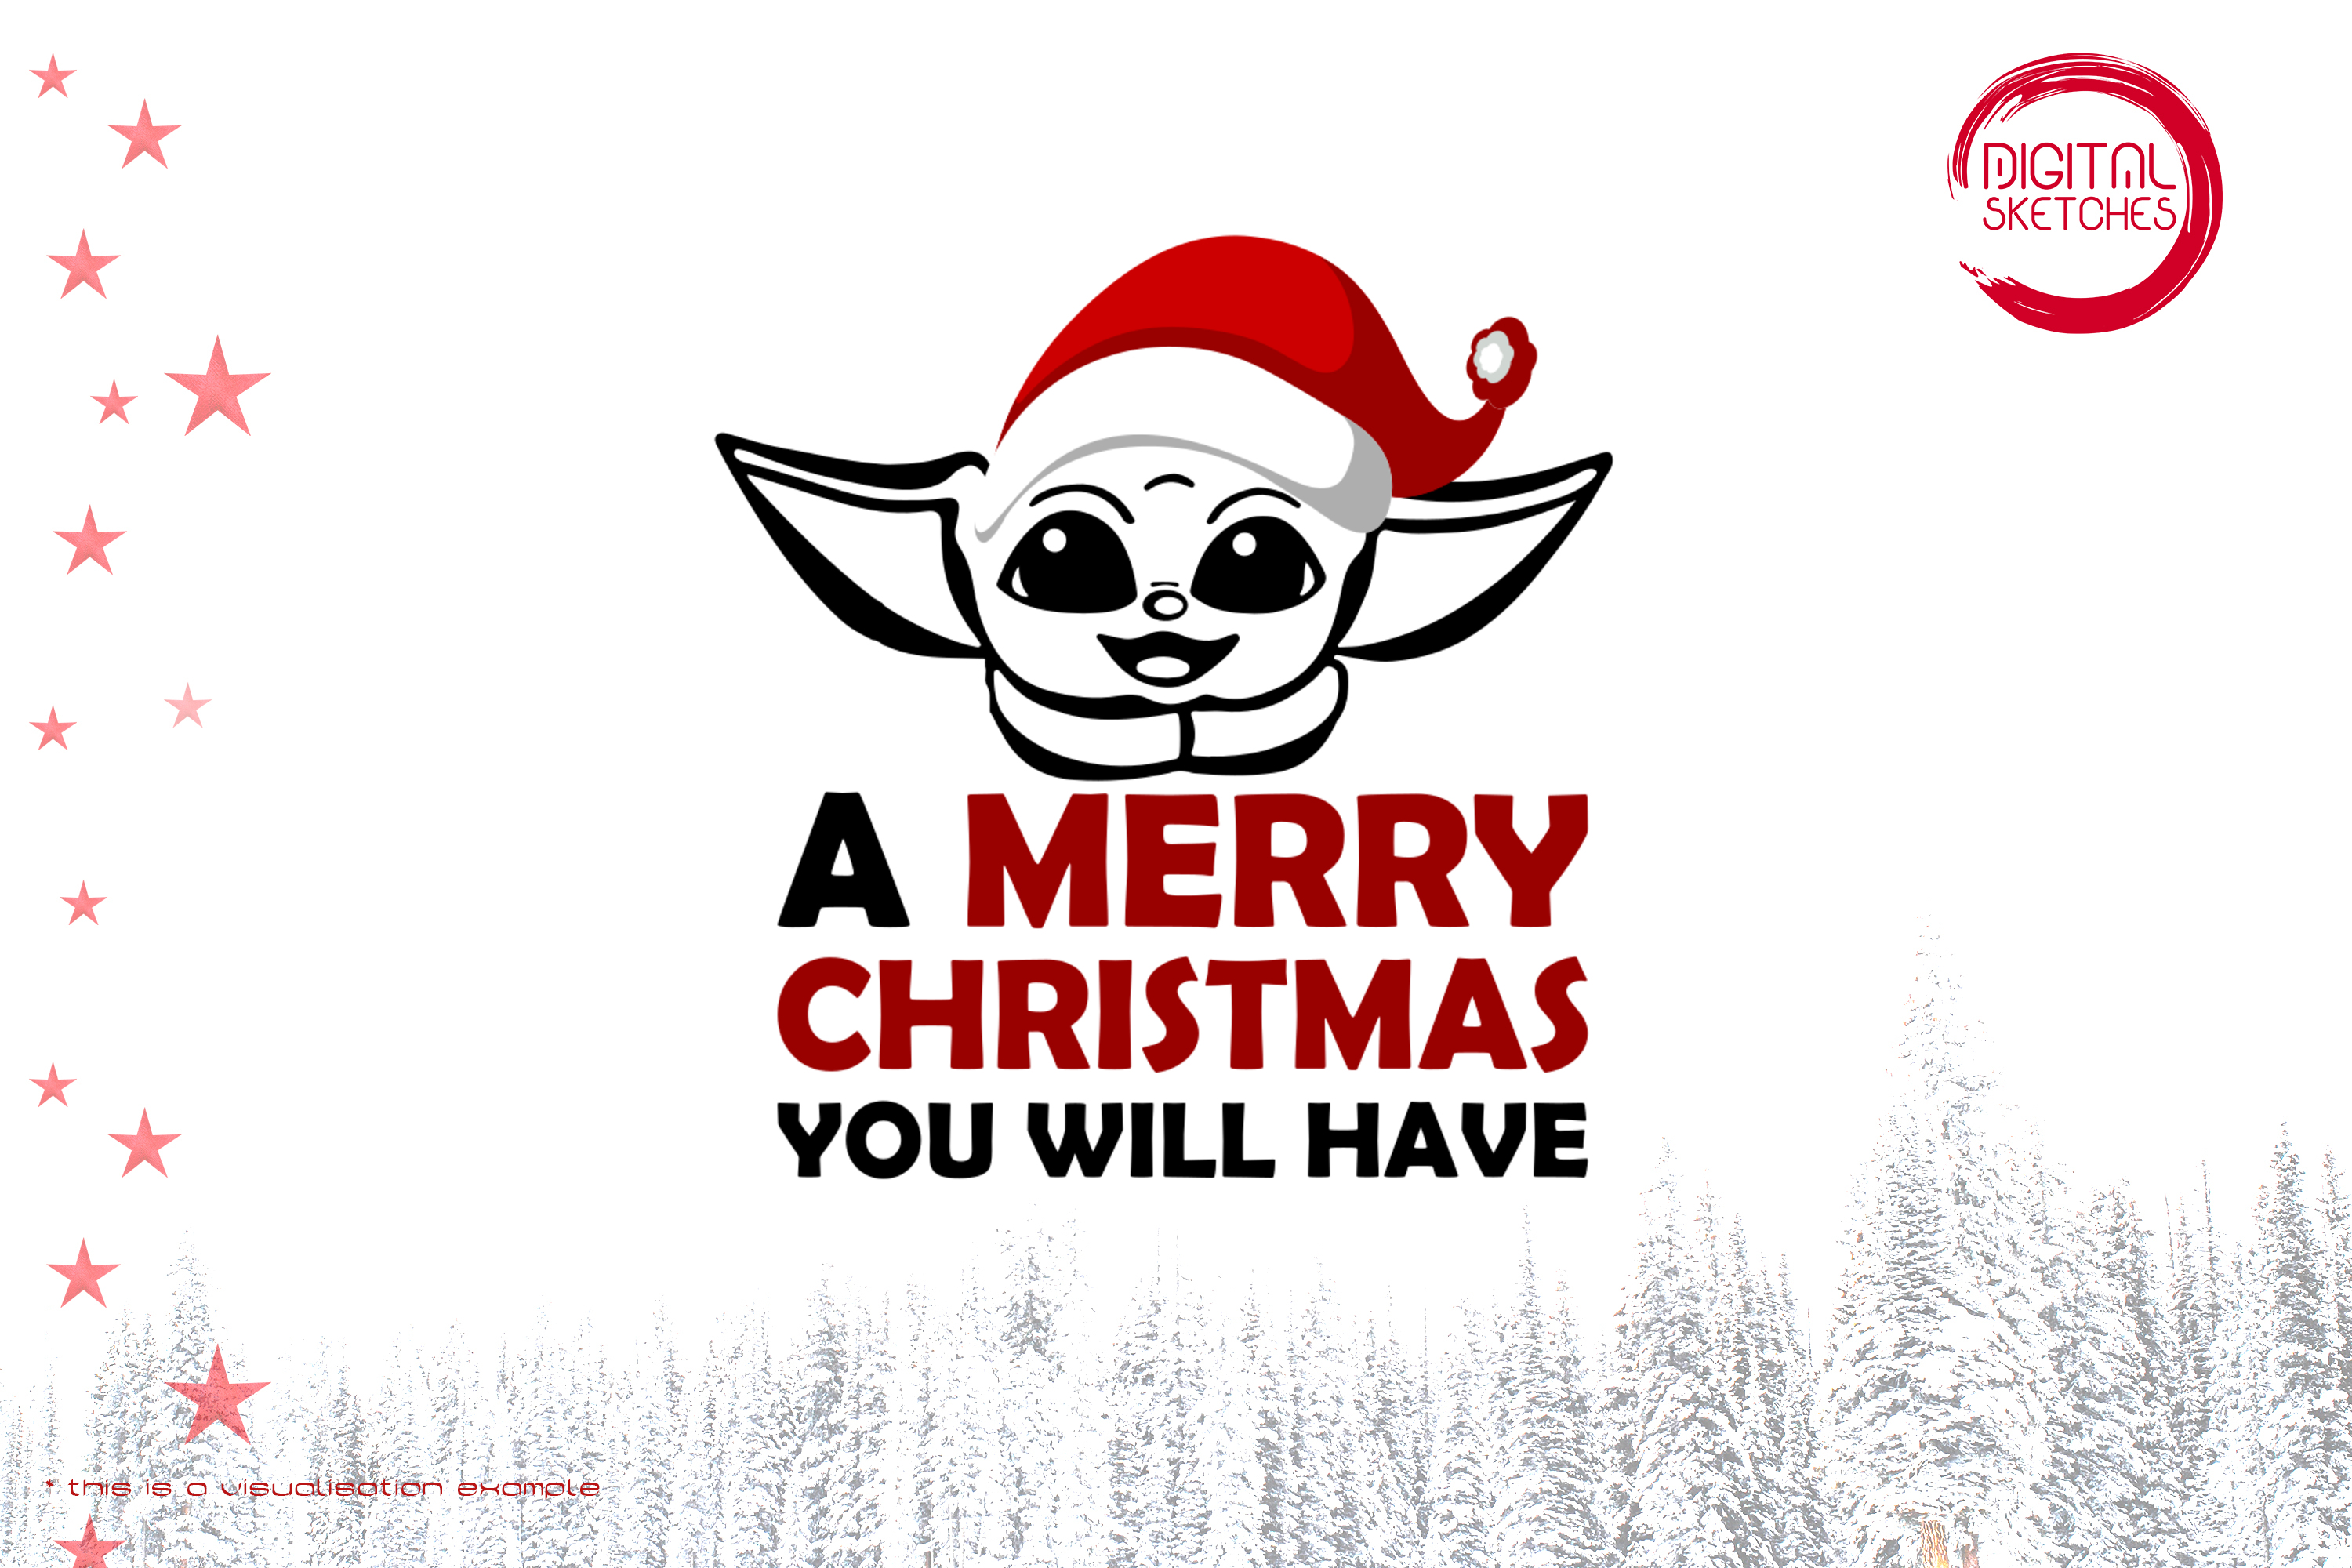 Tribute To Fictional Character Grogu aka Baby Yoda (Merry Christmas)